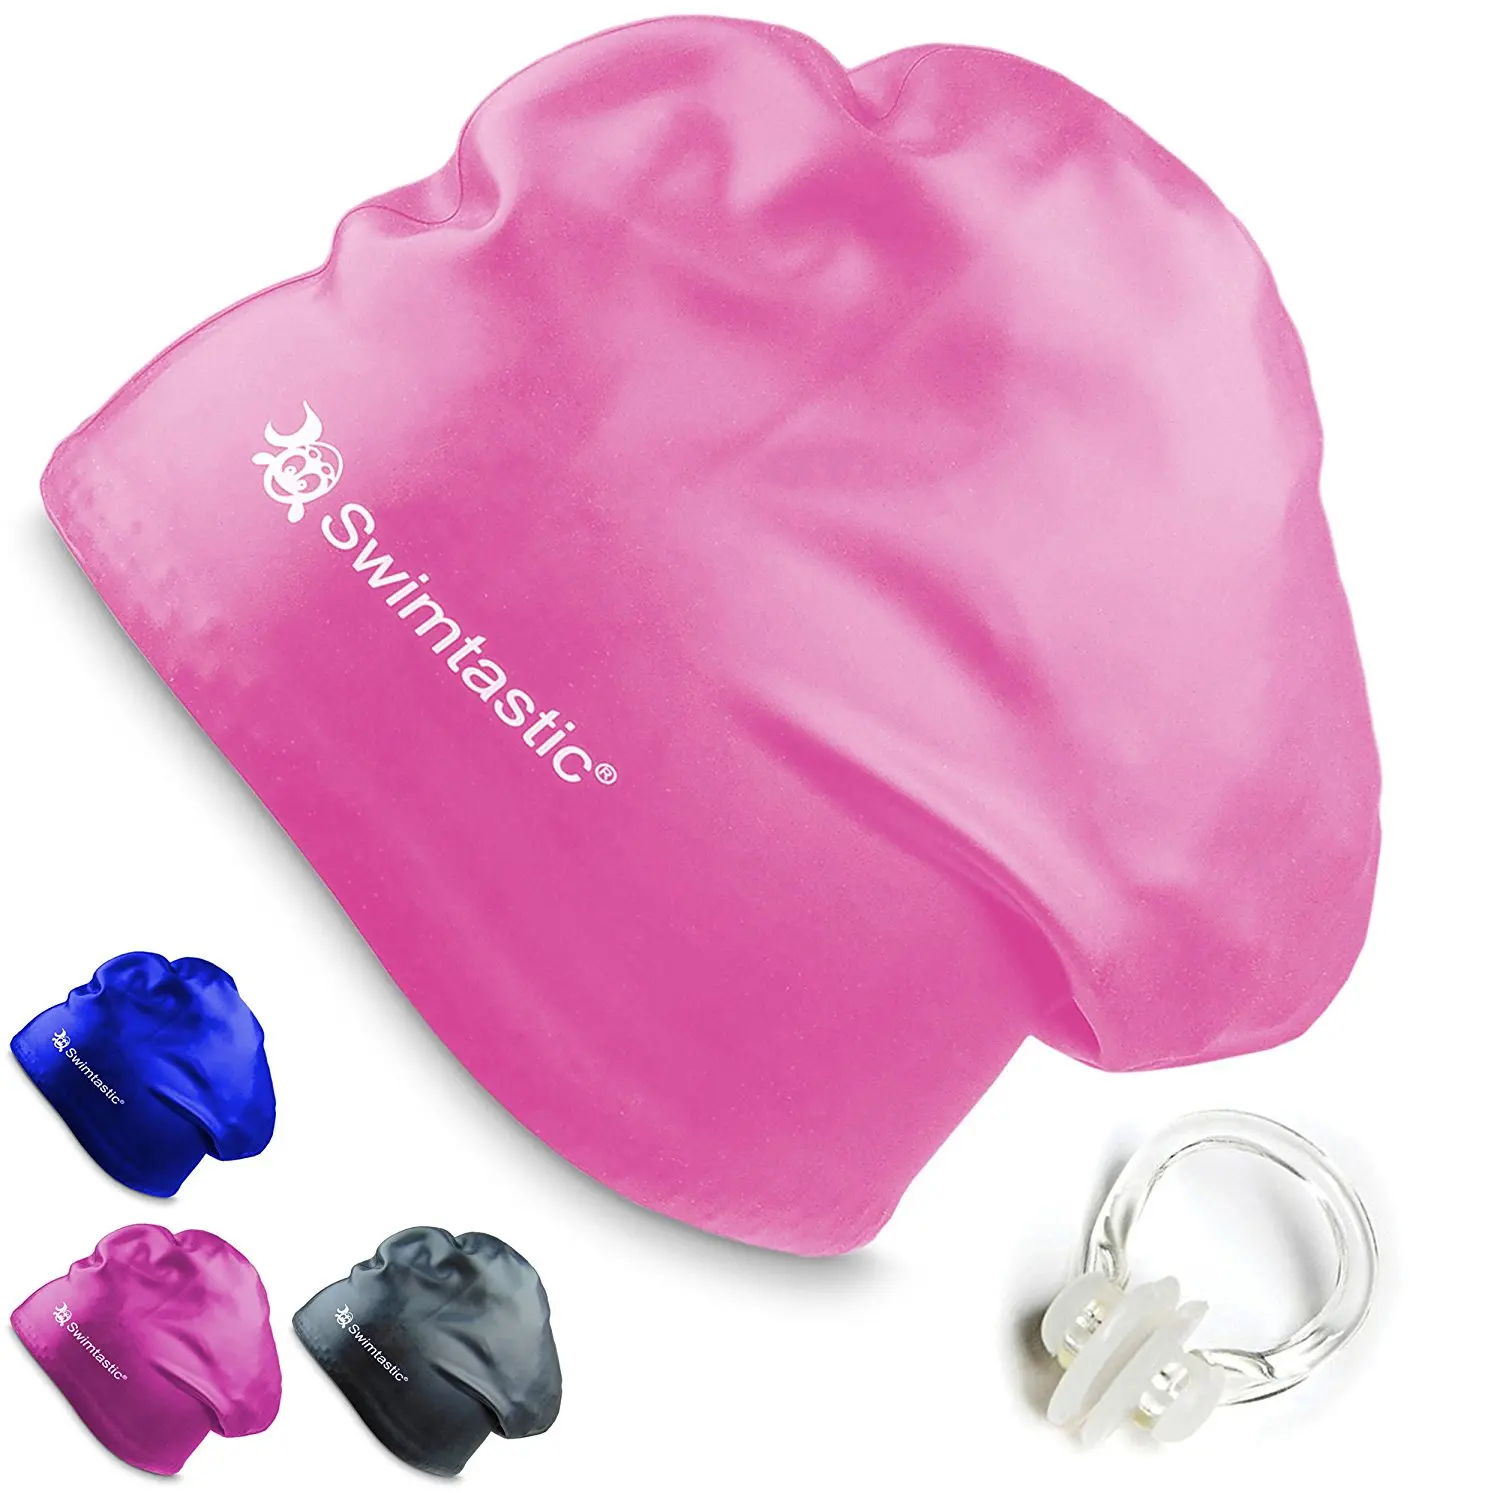 10.99. Swimtastic - Long Hair Swim Cap + Nose Clip - Specially Designed for ...